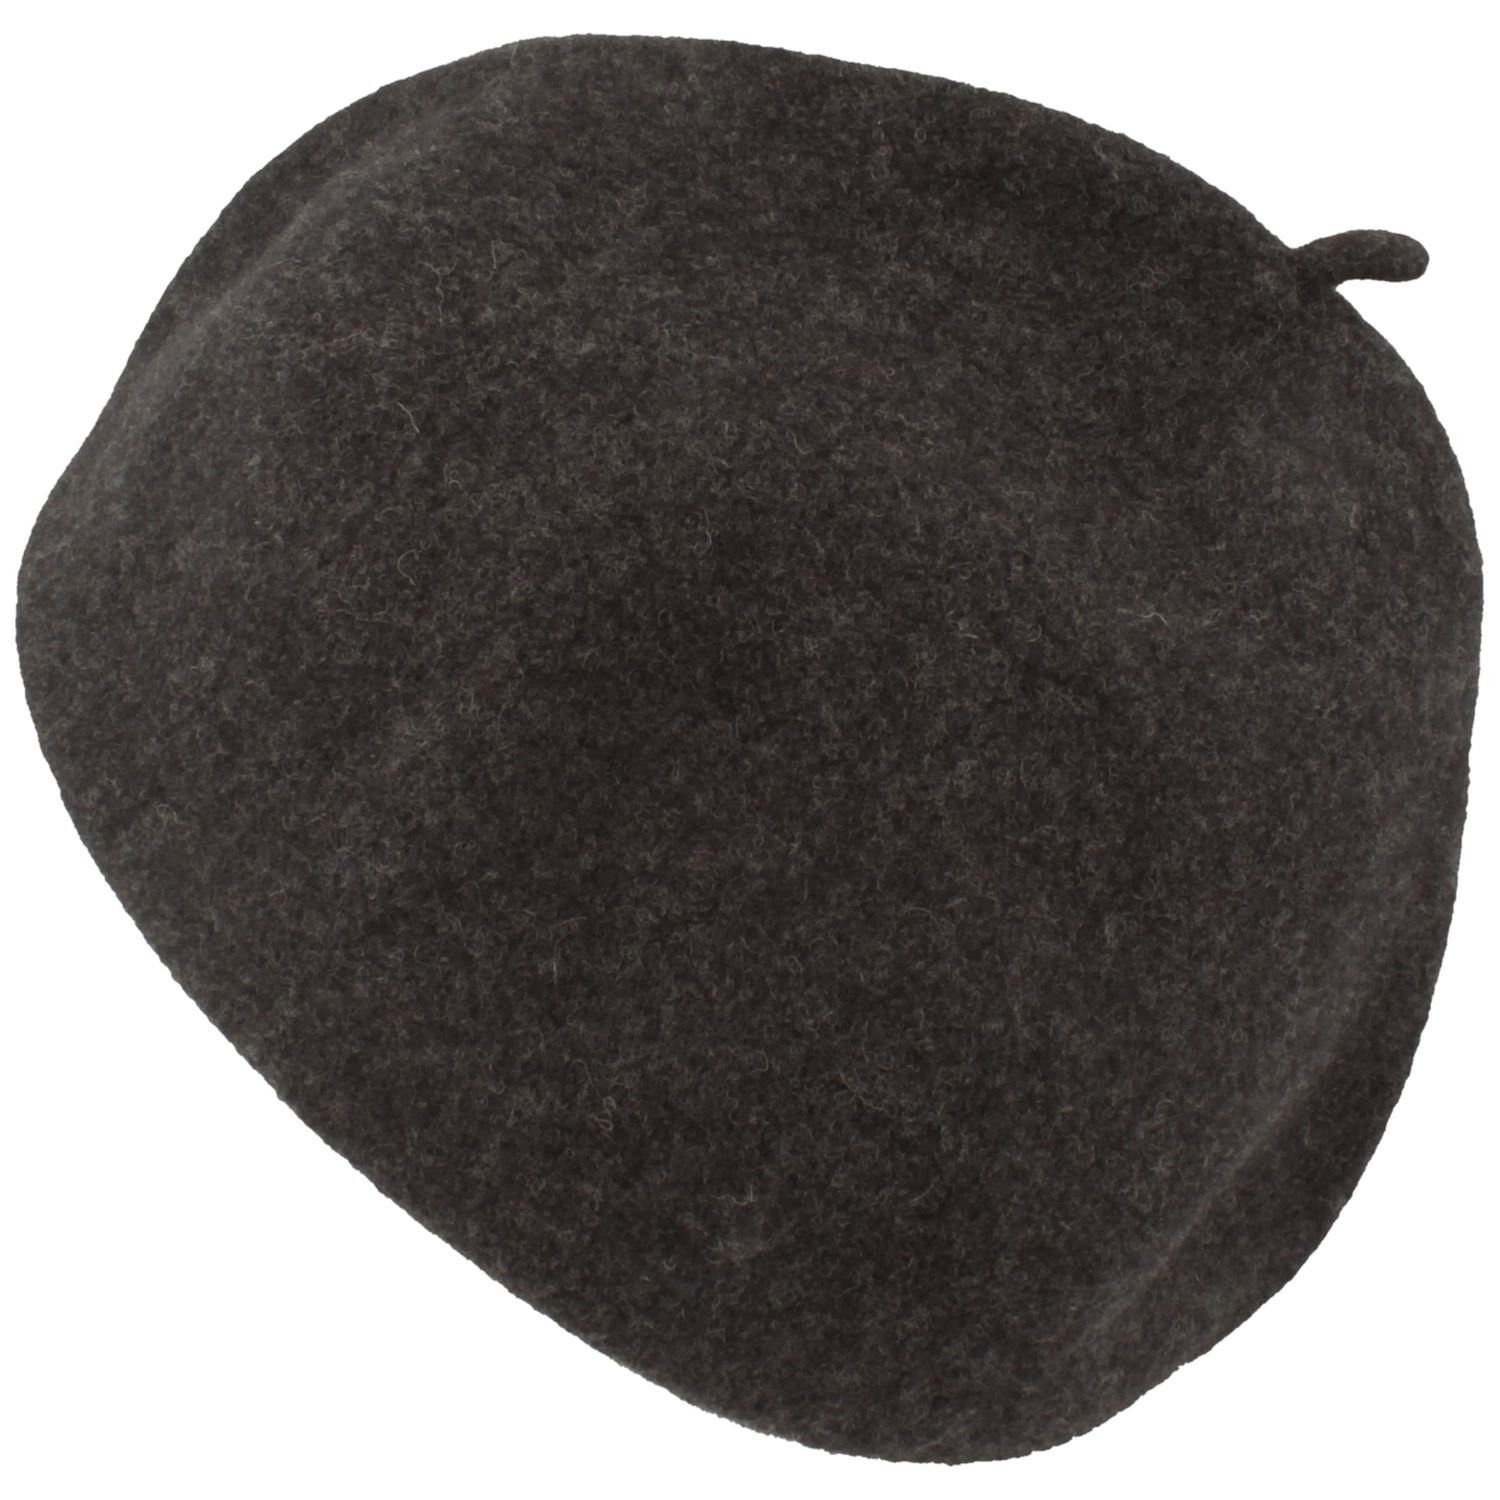 Kopka Baskenmütze Long Beanie Walkmütze Stegbaske aus 100% Wolle schwarz-meliert